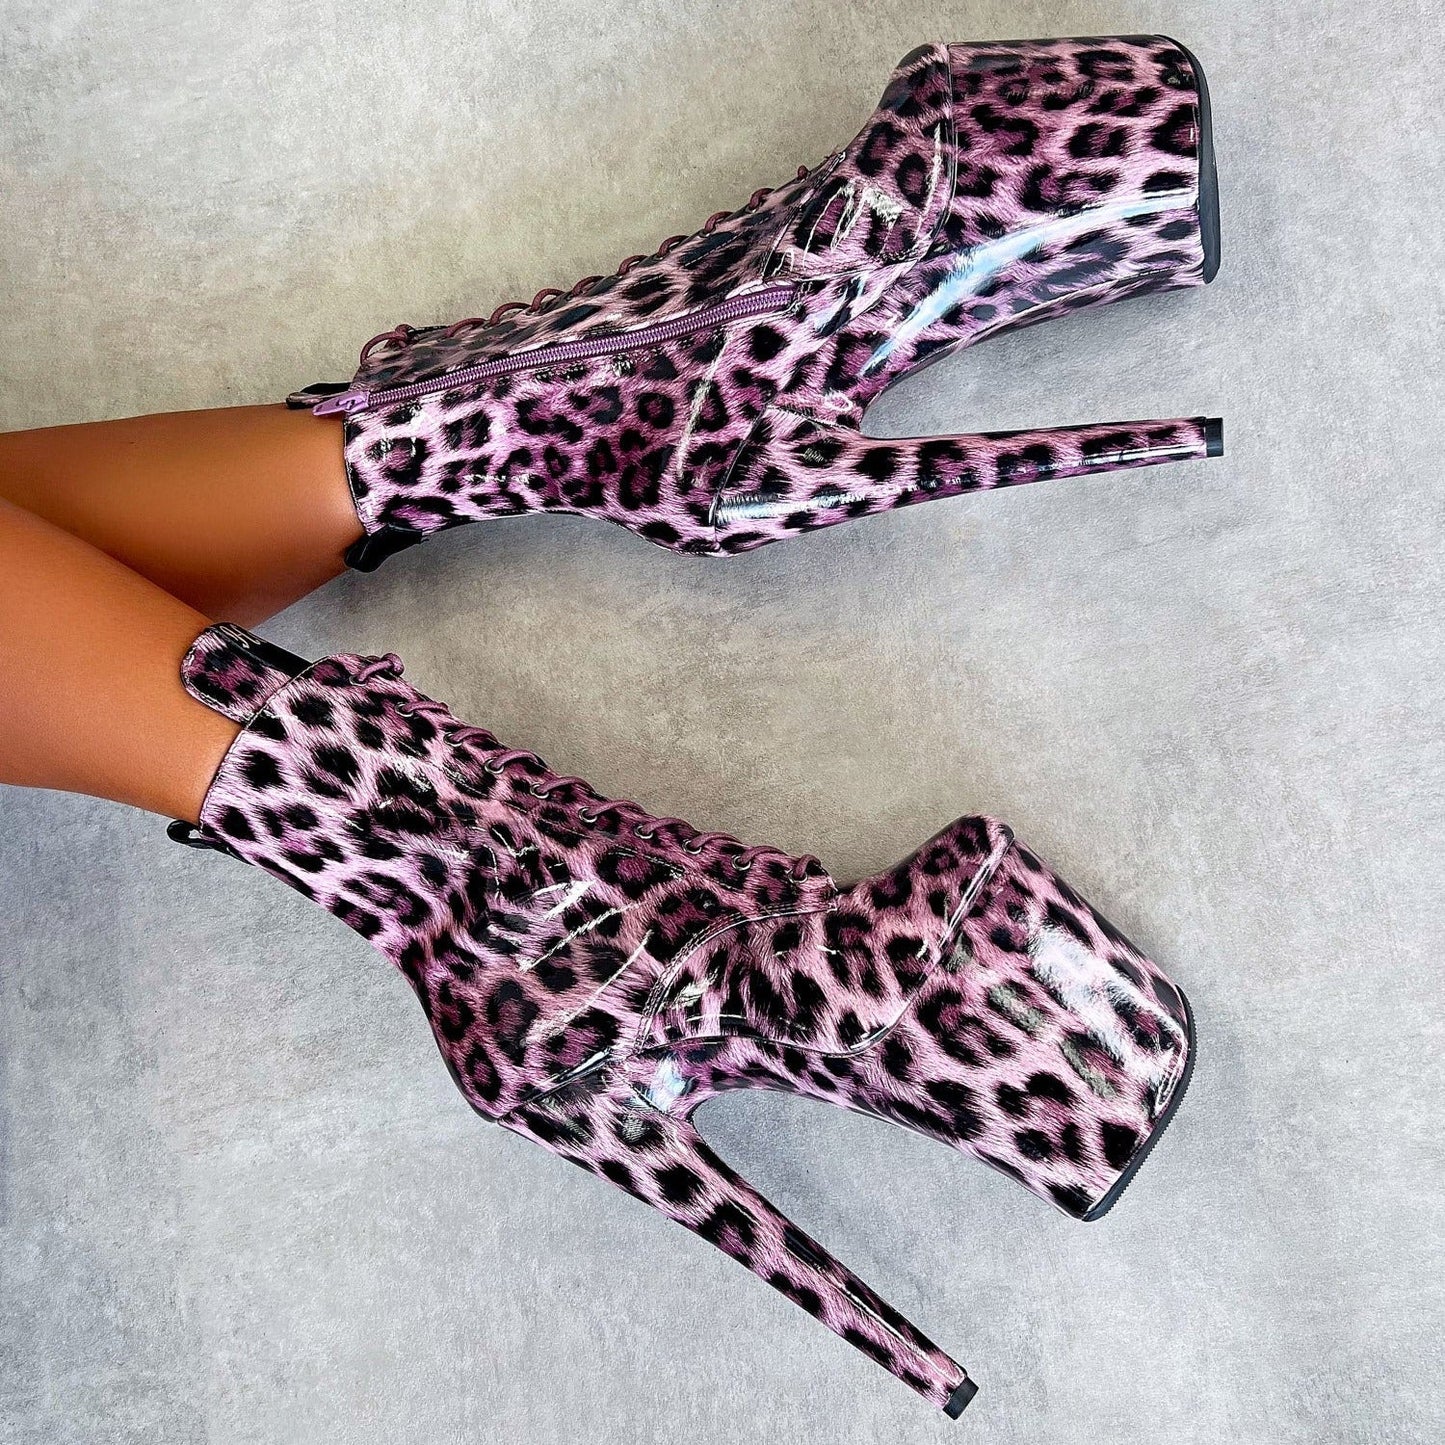 Purple Leopard Boot - 8 INCH, stripper shoe, stripper heel, pole heel, not a pleaser, platform, dancer, pole dance, floor work